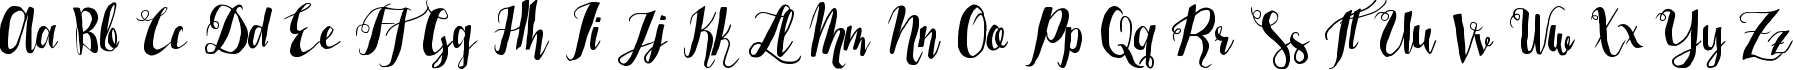 Пример написания английского алфавита шрифтом LaserMetal